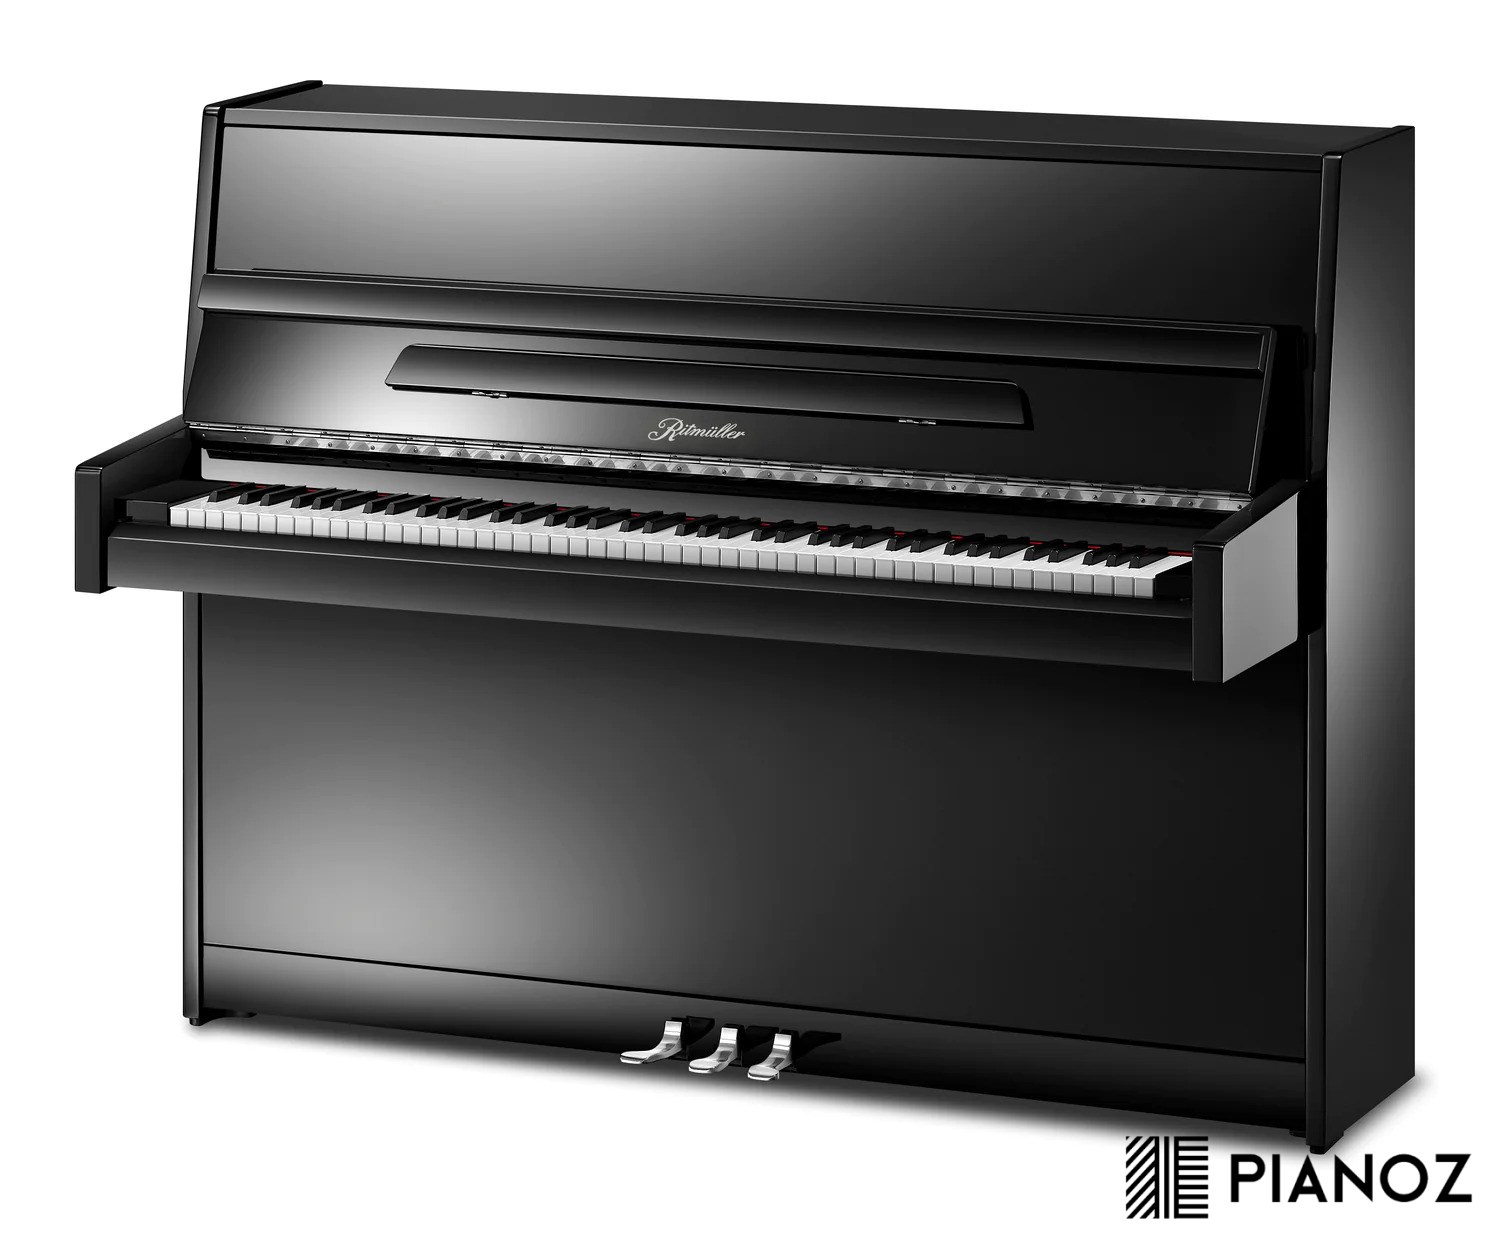 Ritmuller EU112S Upright Piano piano for sale in UK